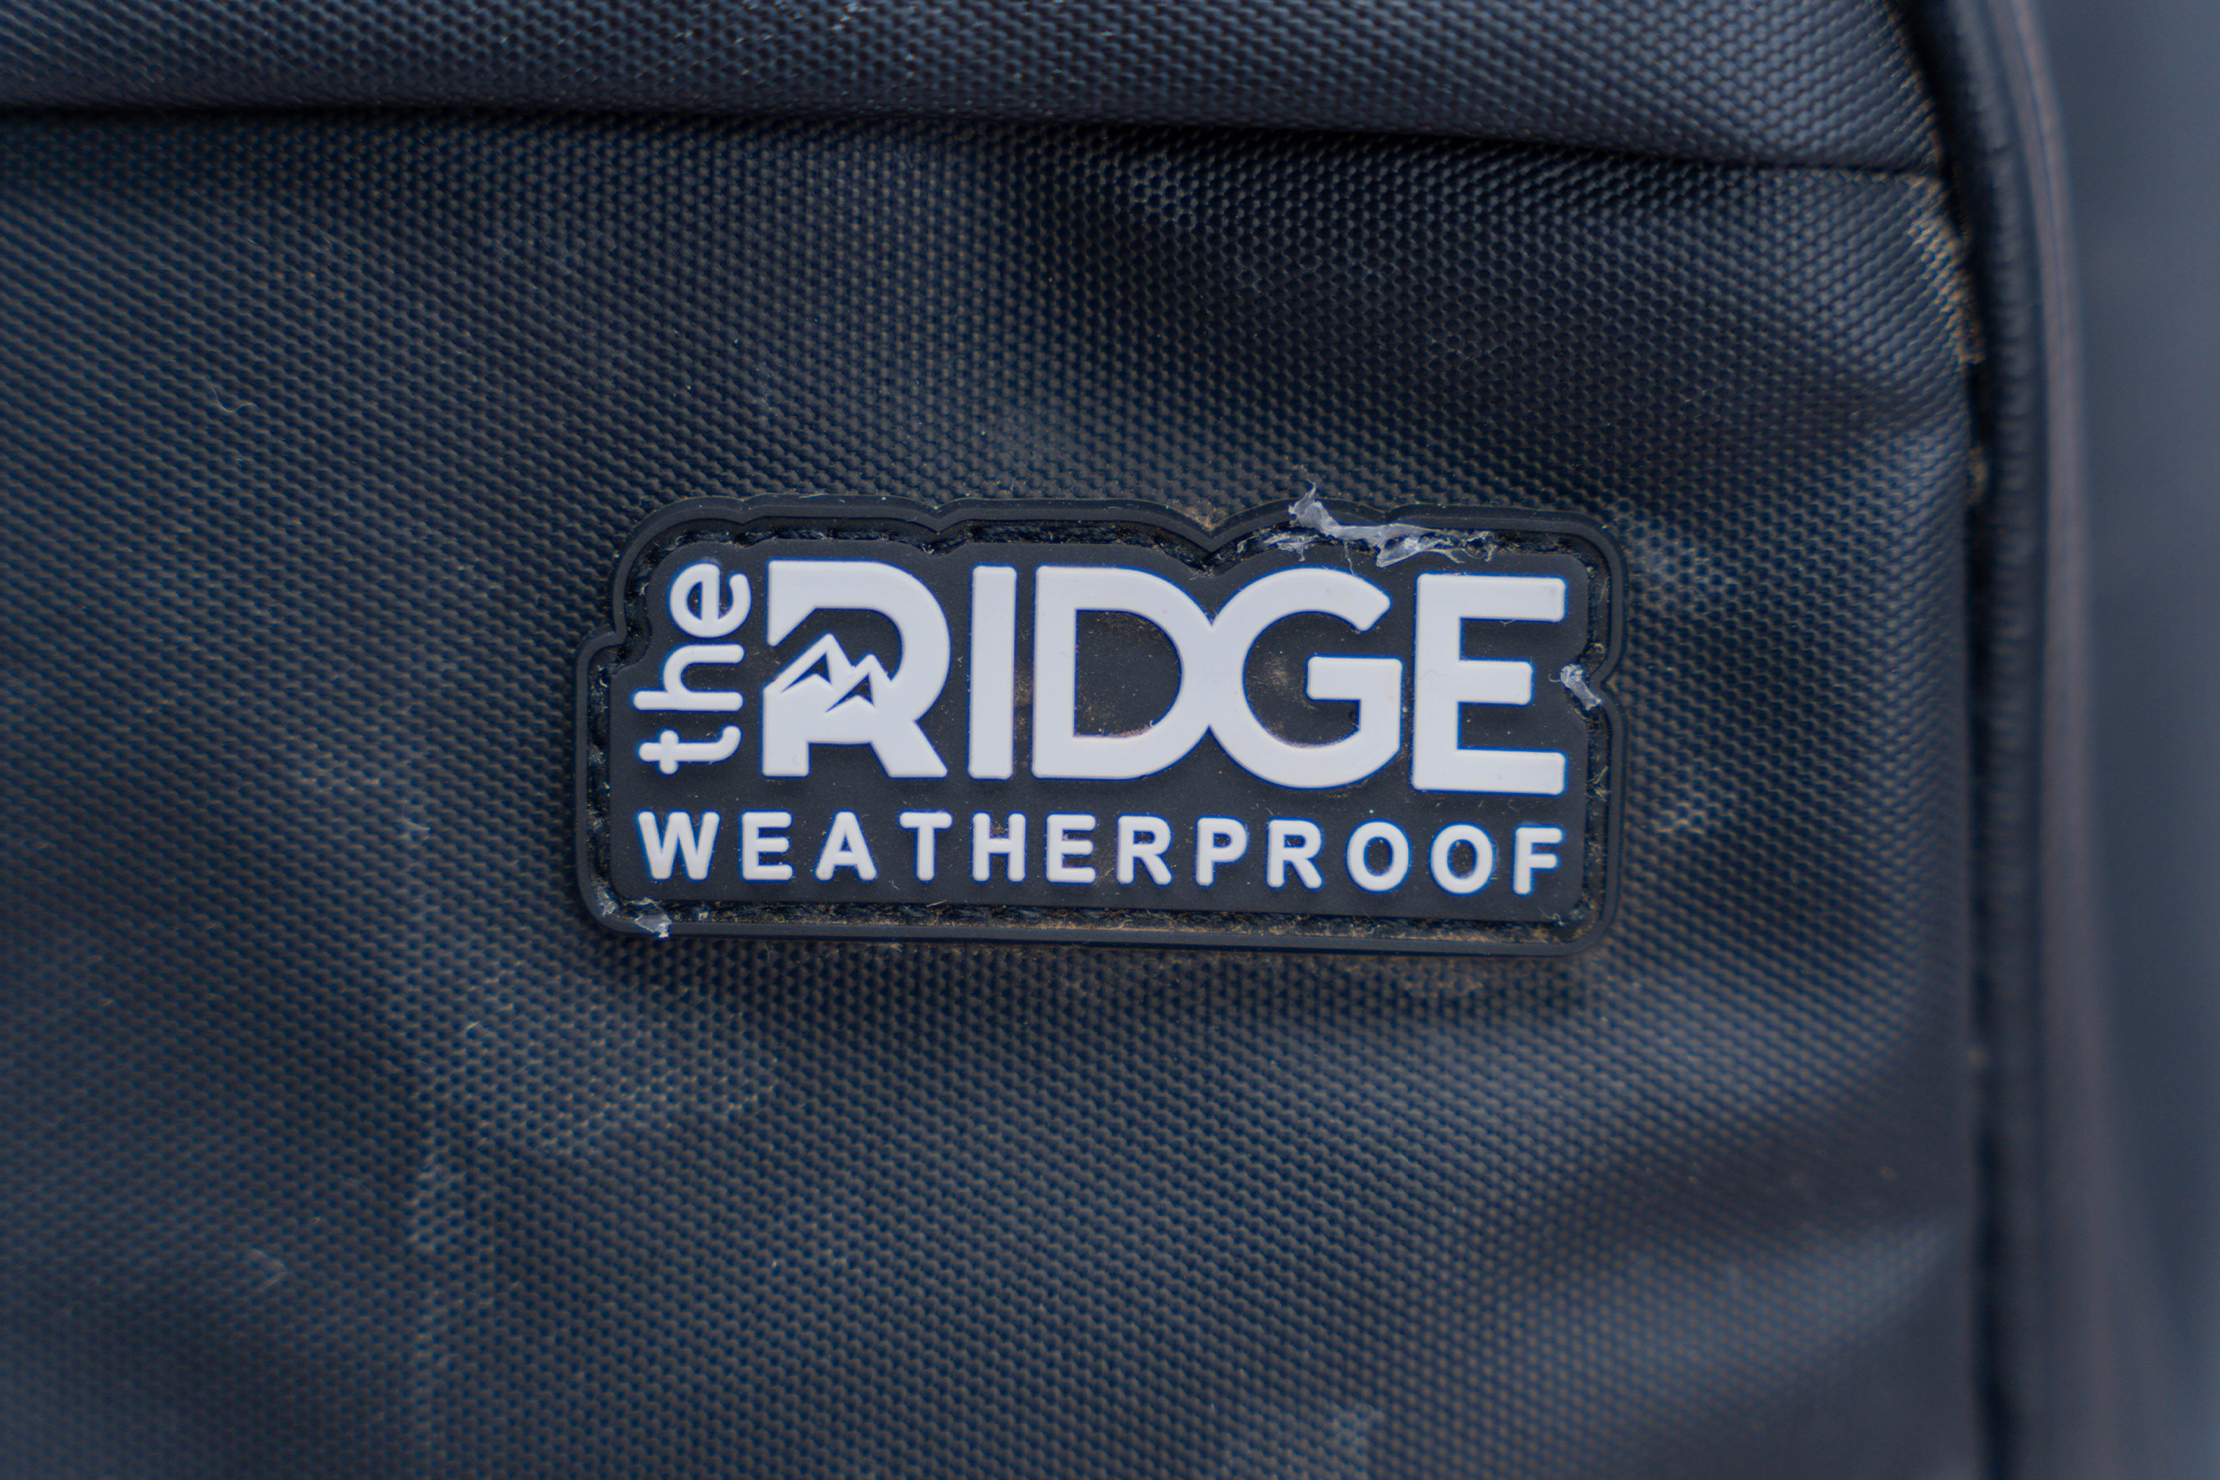 The Ridge Commuter Backpack Weatherproof Brand